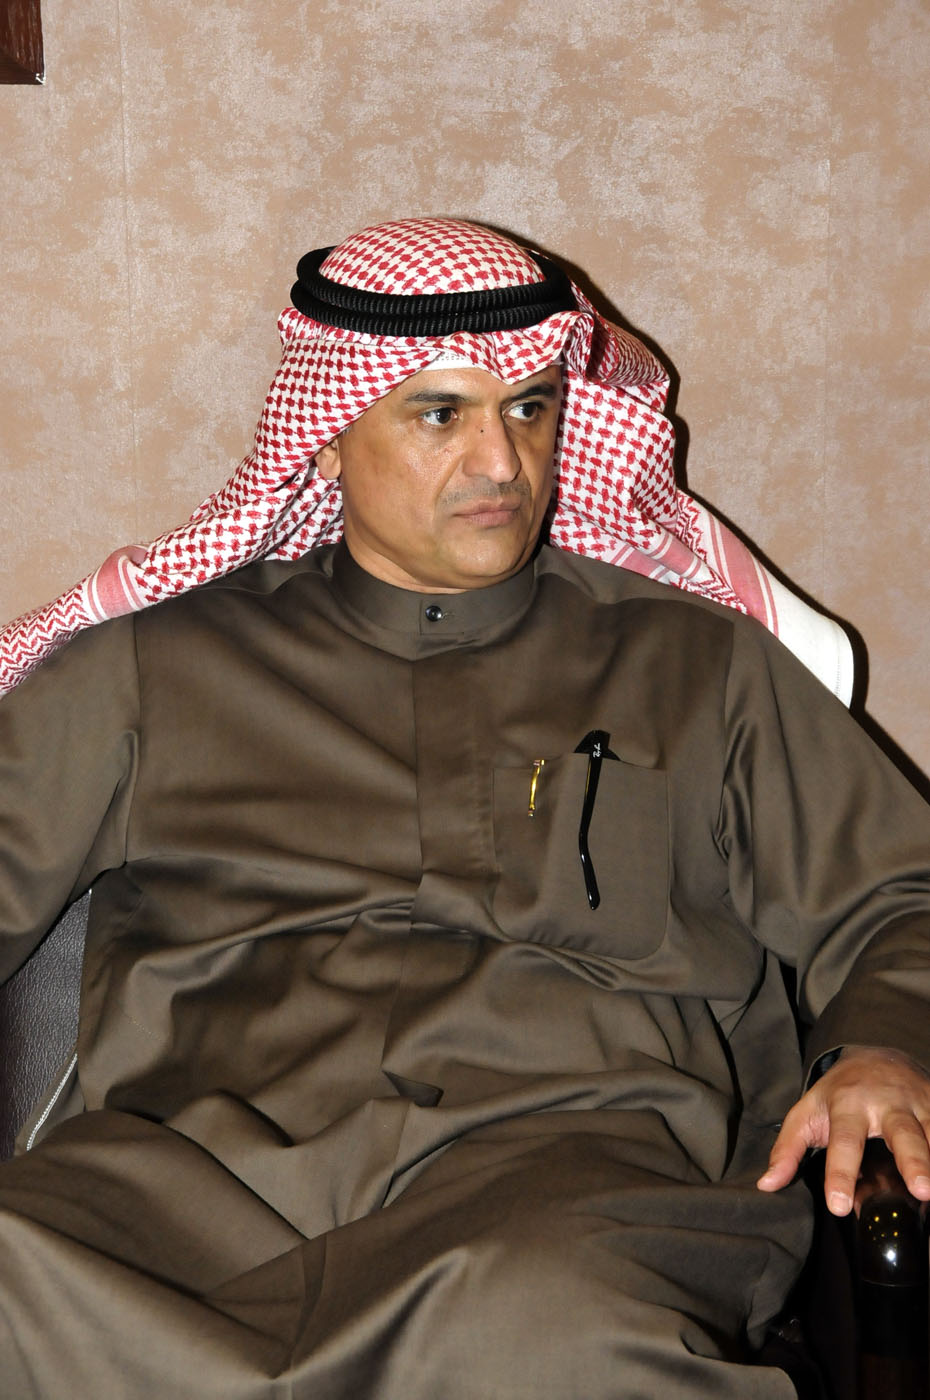 Kuwait's Ambassador to Cambodia Dhrar Nasser Al-Tuwaijri